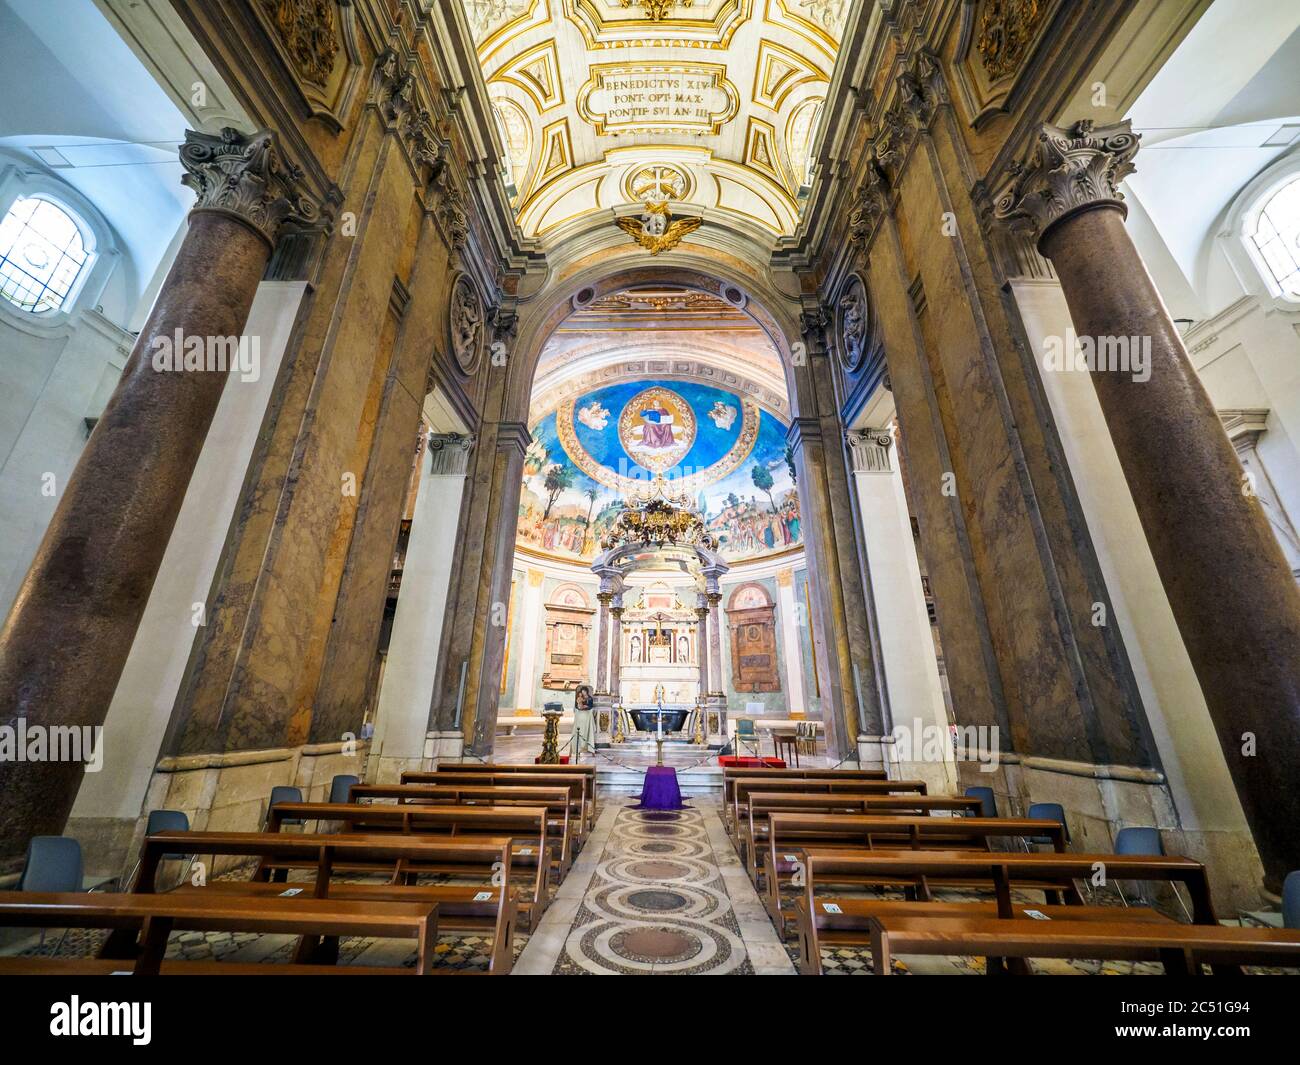 Basilica di Santa Croce in Gerusalemme (Basilica of the Holy Cross in Jerusalem) - Rome, Italy Stock Photo